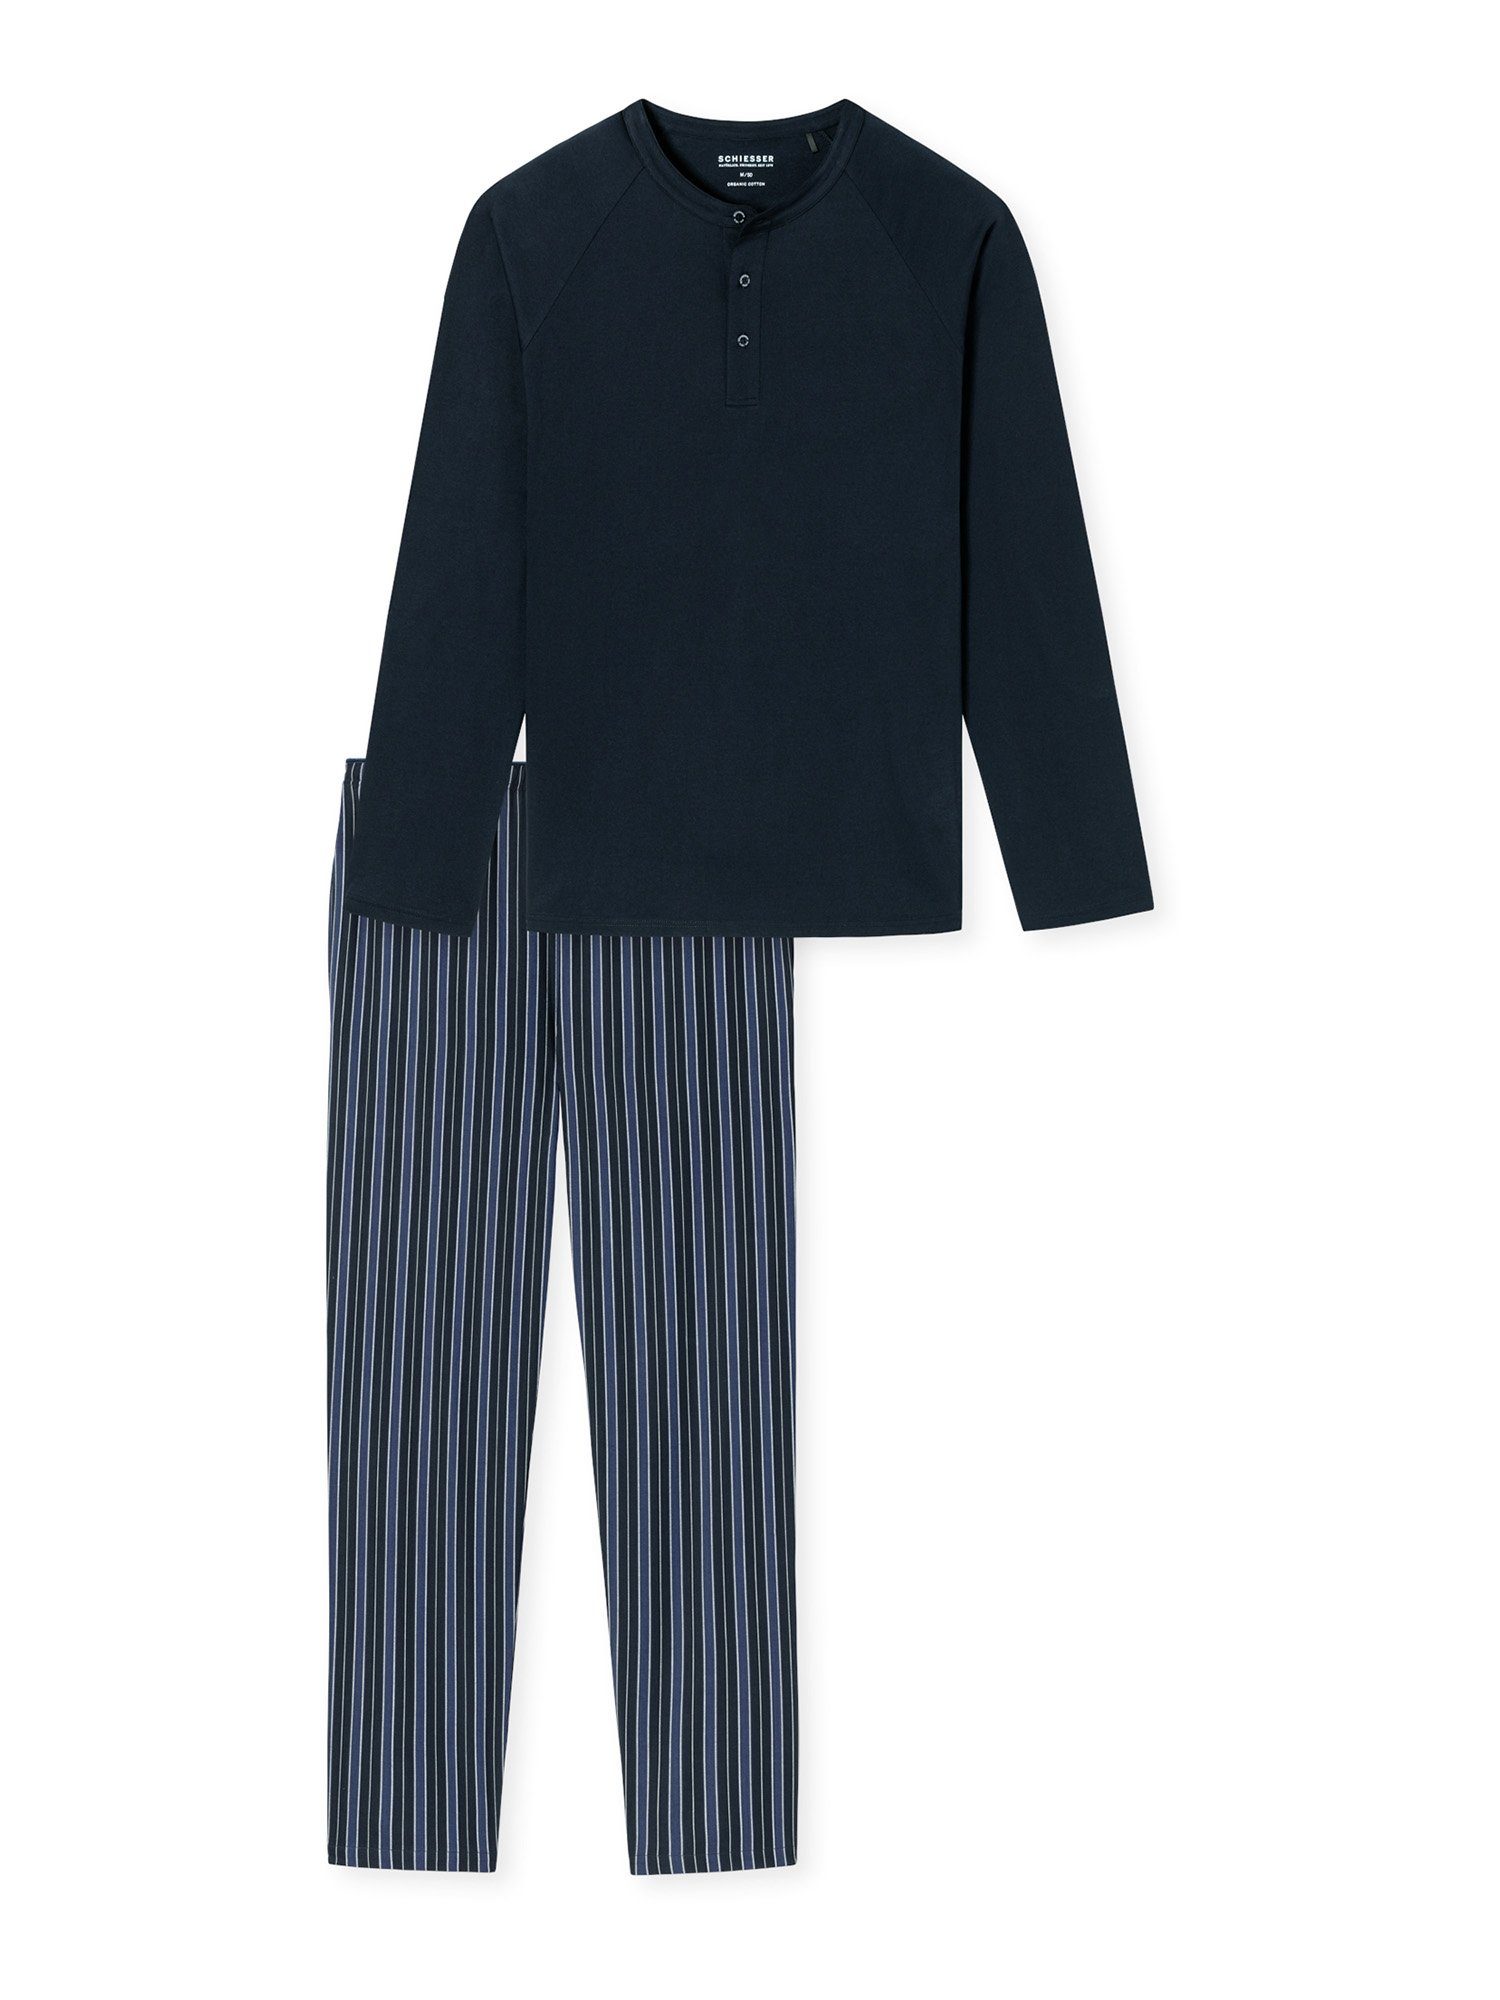 Schiesser Pyjama Selected Premium schlafanzug pyjama schlafmode nachtblau